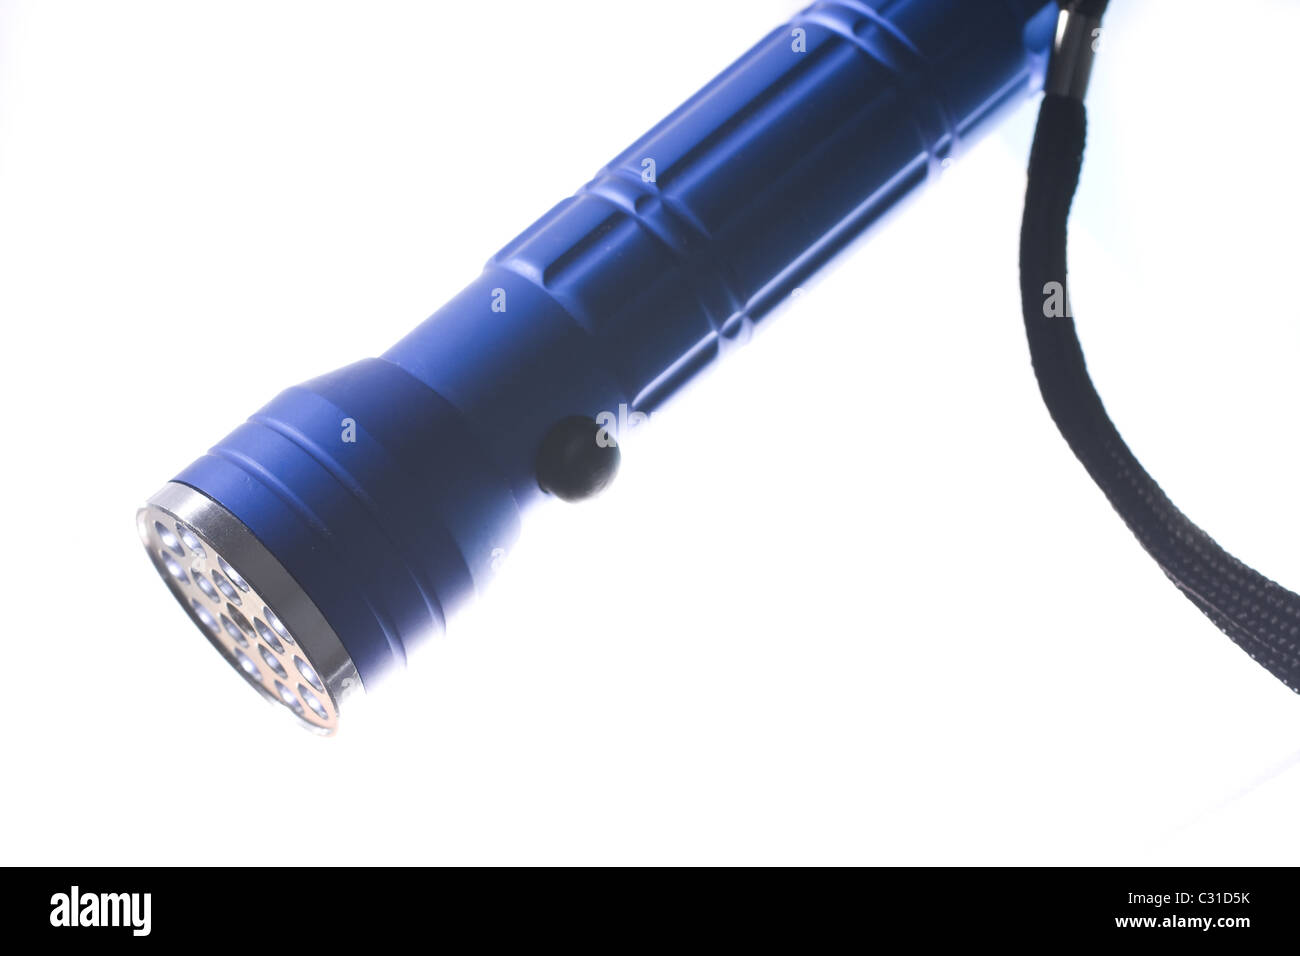 it is a blue rugged aluminum flashlight, Stock Photo